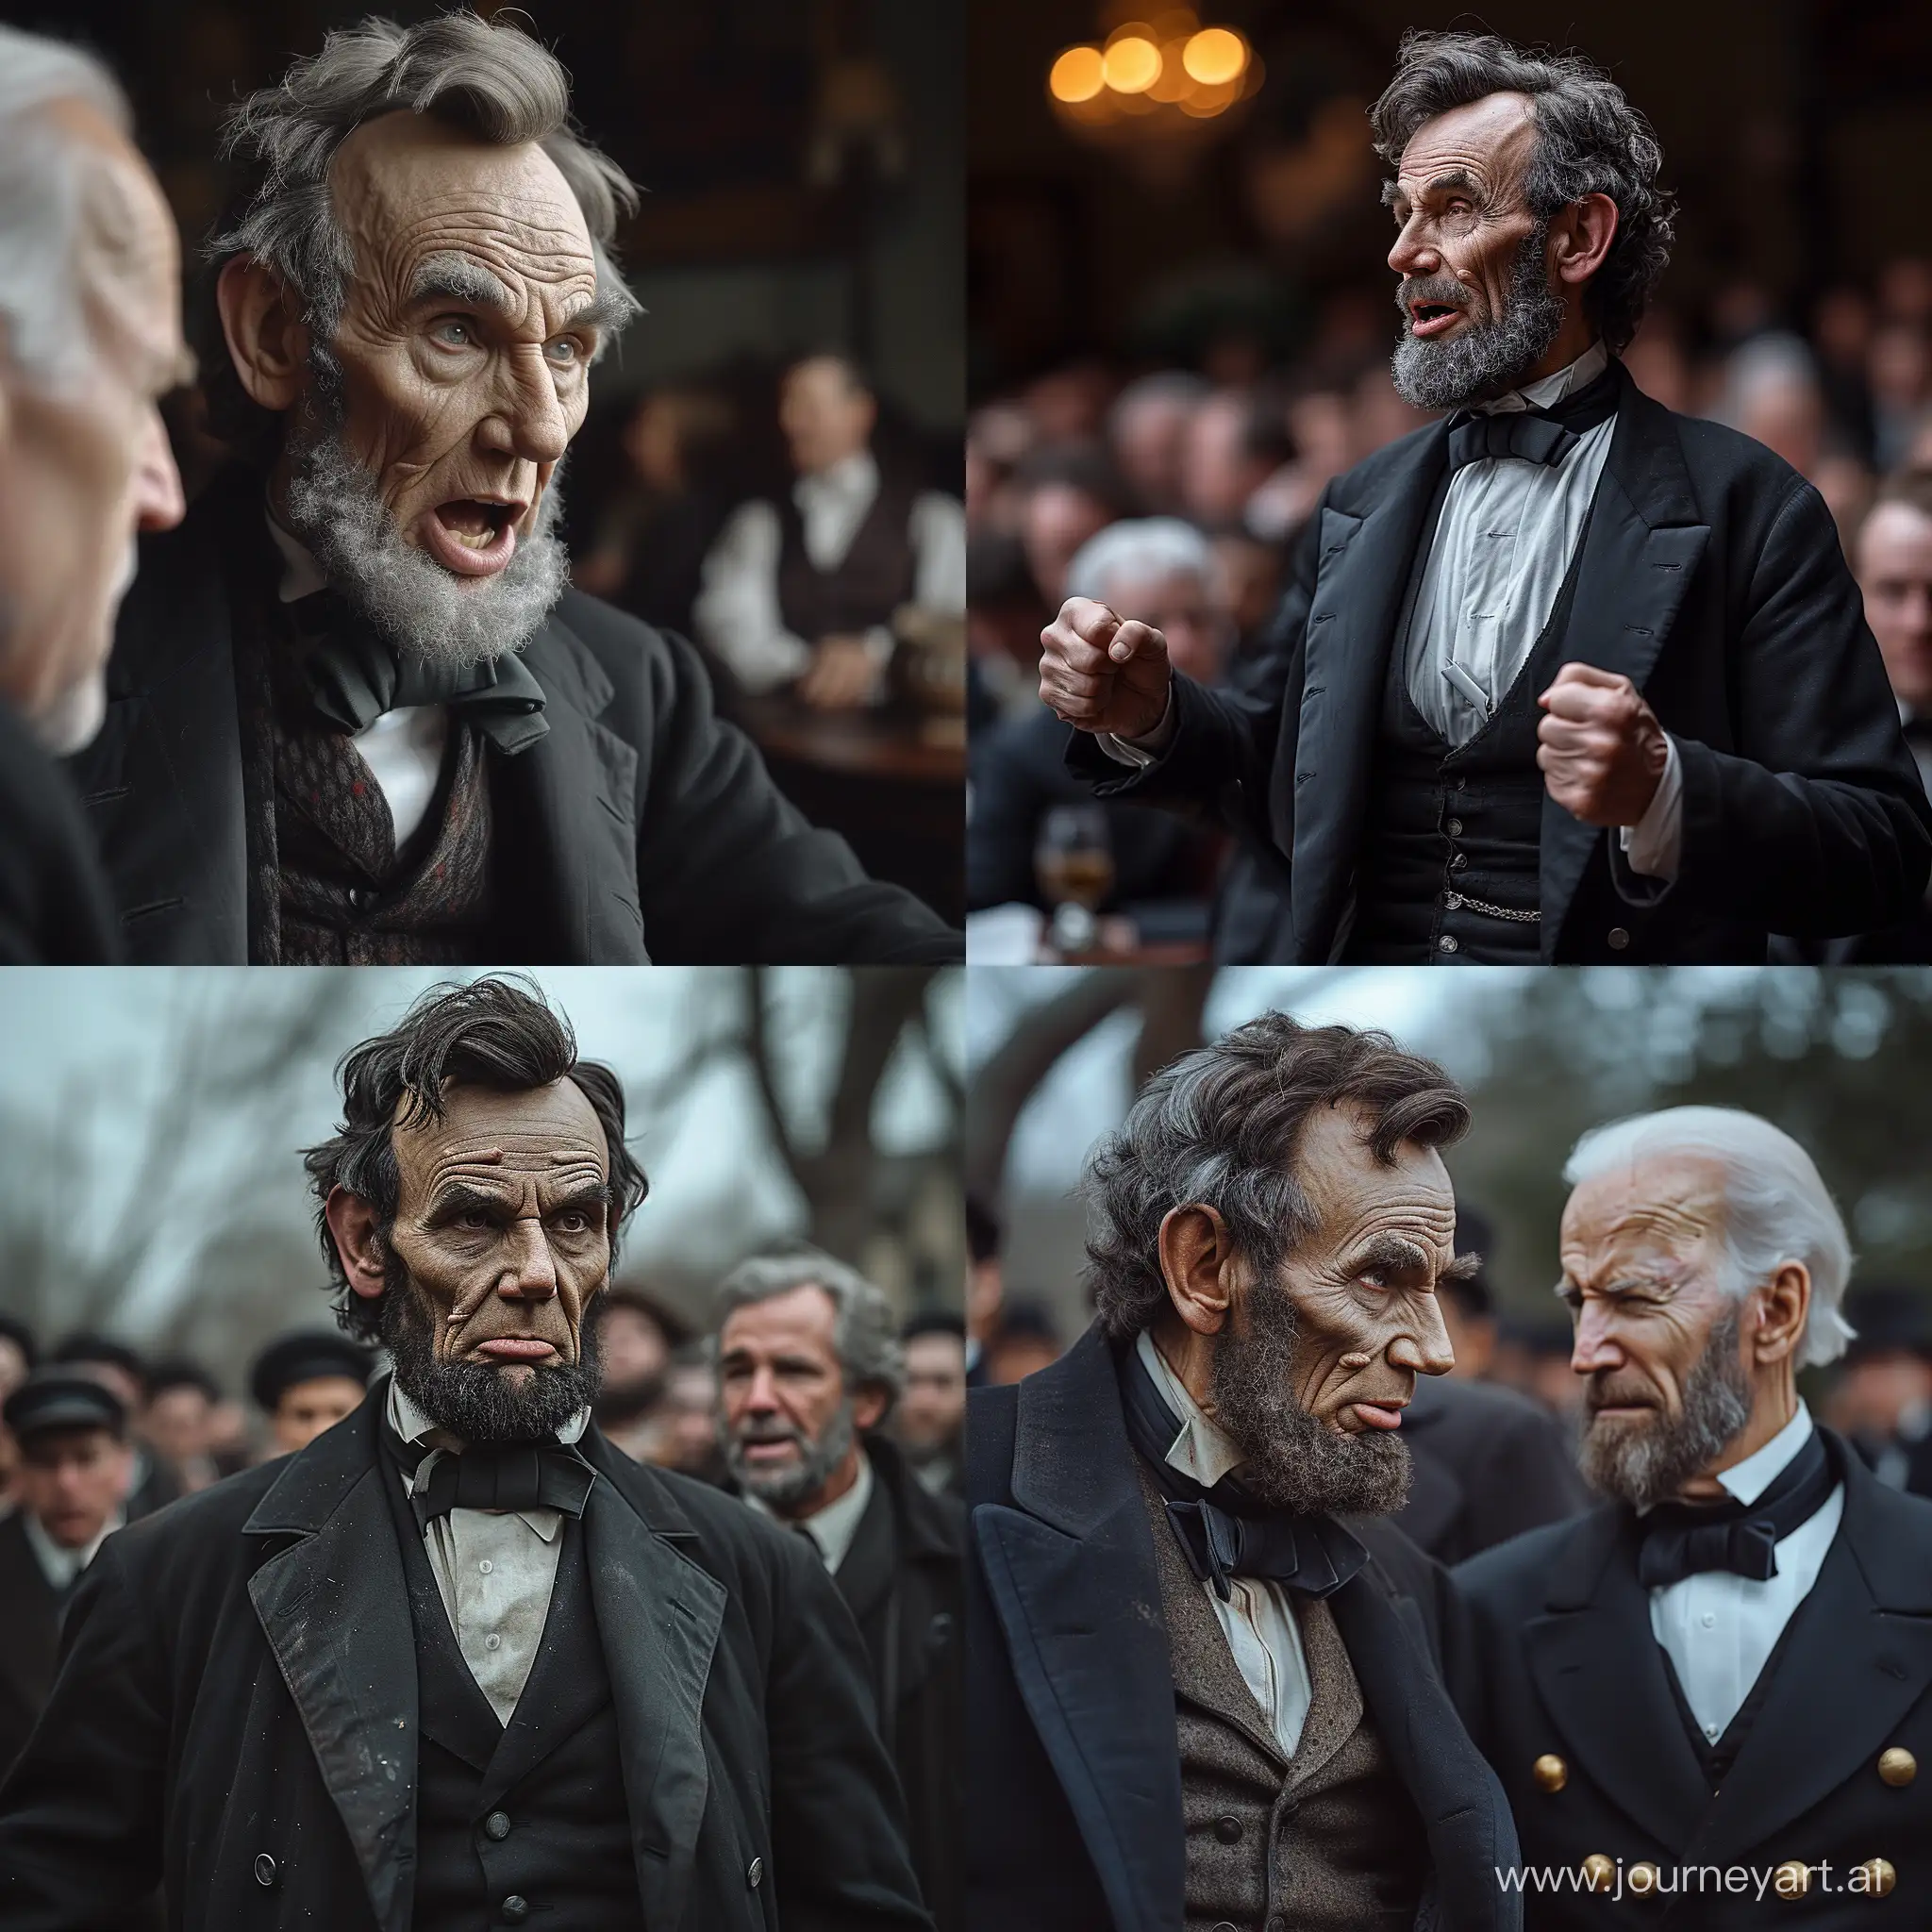 Fiery-Historical-Confrontation-Abraham-Lincoln-Rebukes-Joe-Biden